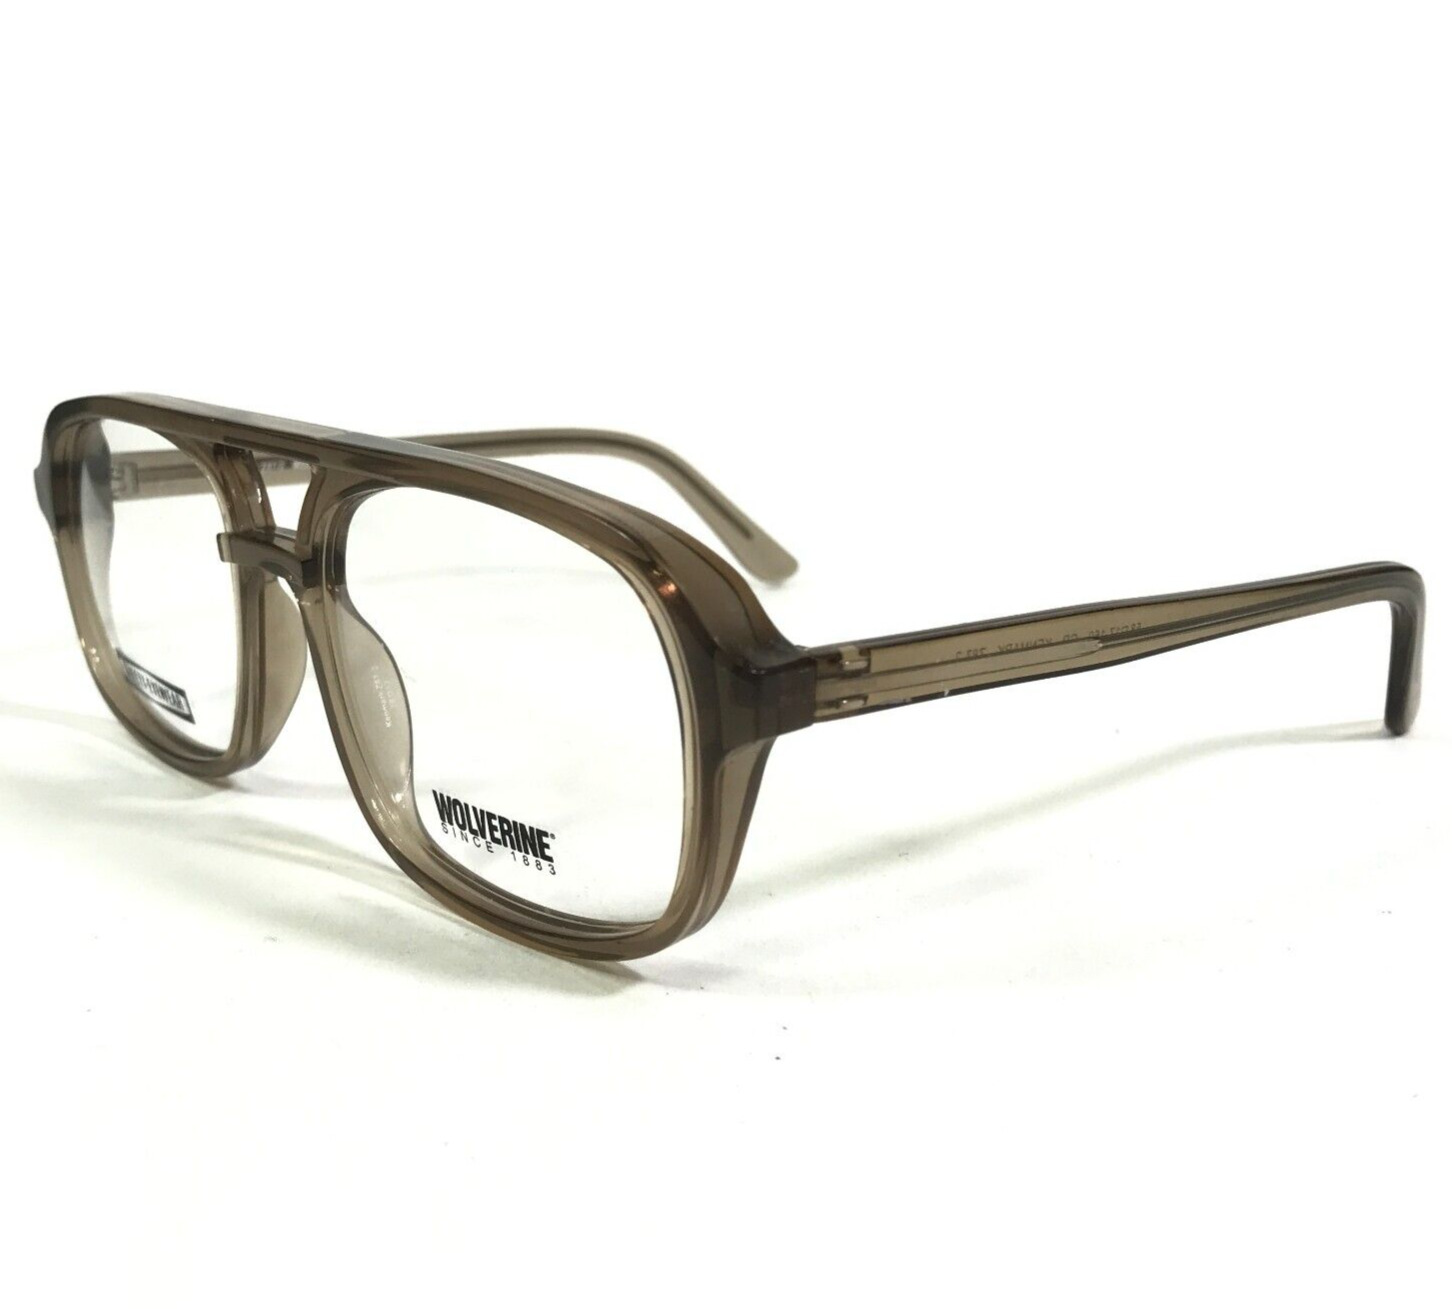 Wolverine Safety Eyeglasses Frames W031 GR KENMARK Clear Gray Large 58-17-150